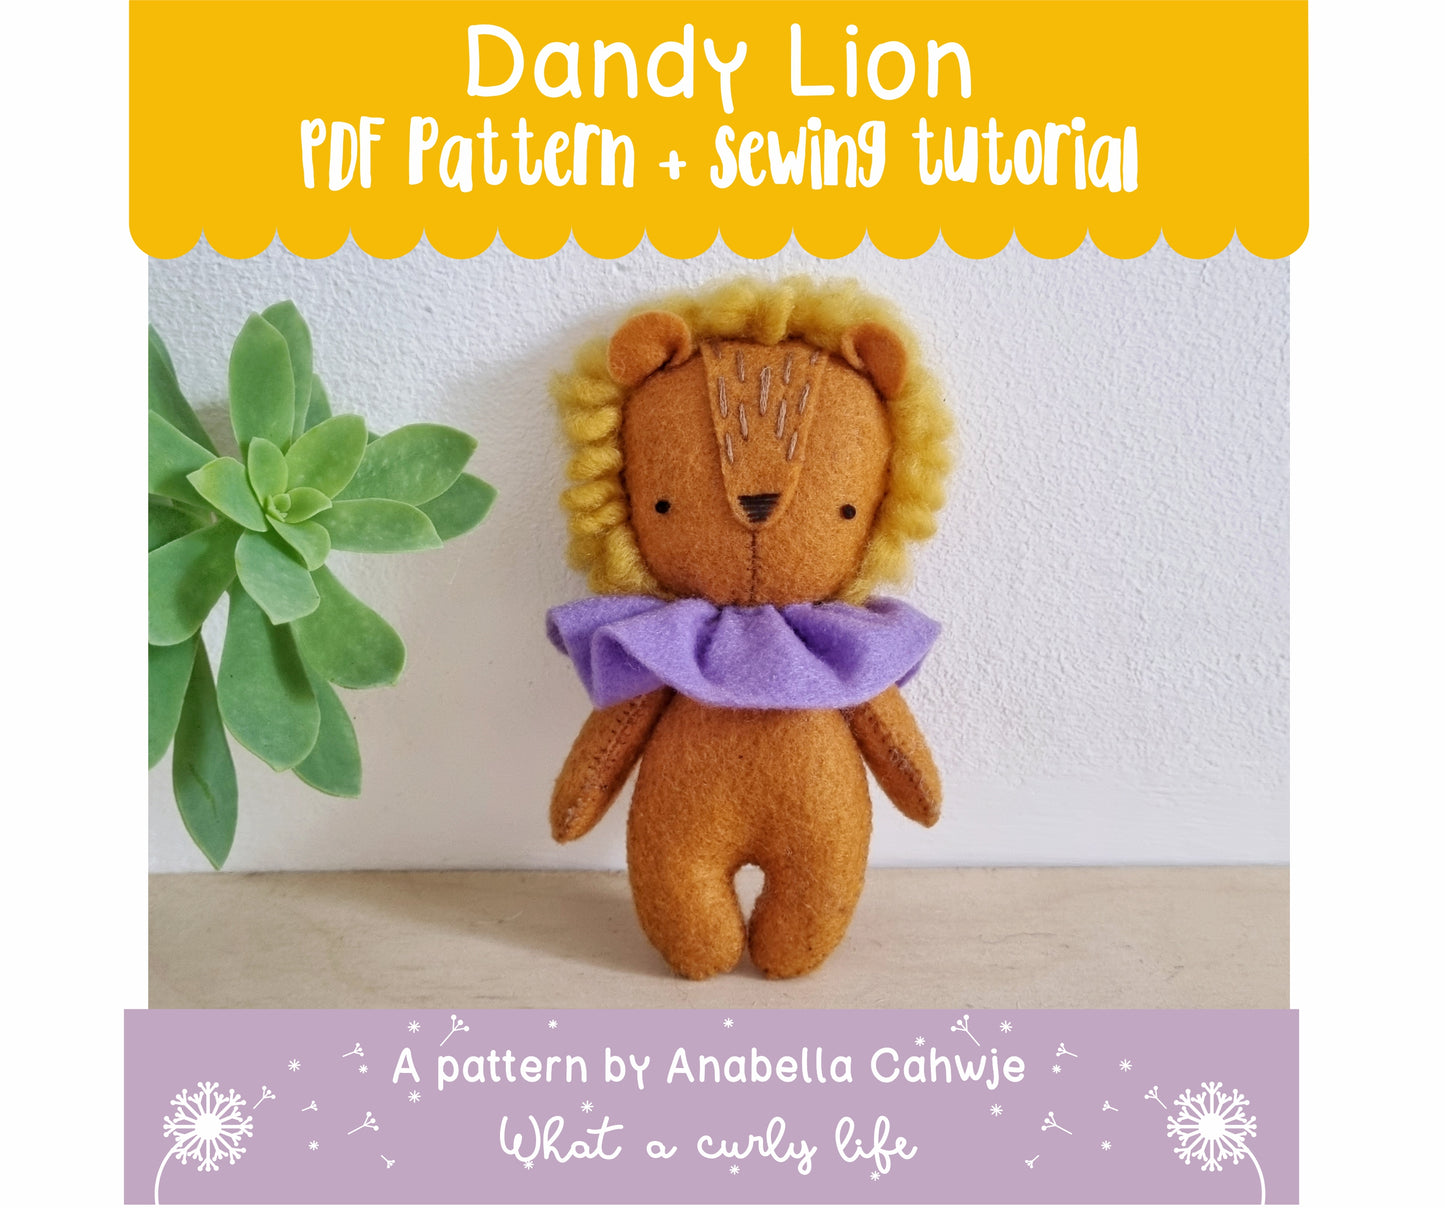 Dandy Lion with Ruff PDF Patterns + Tutorial